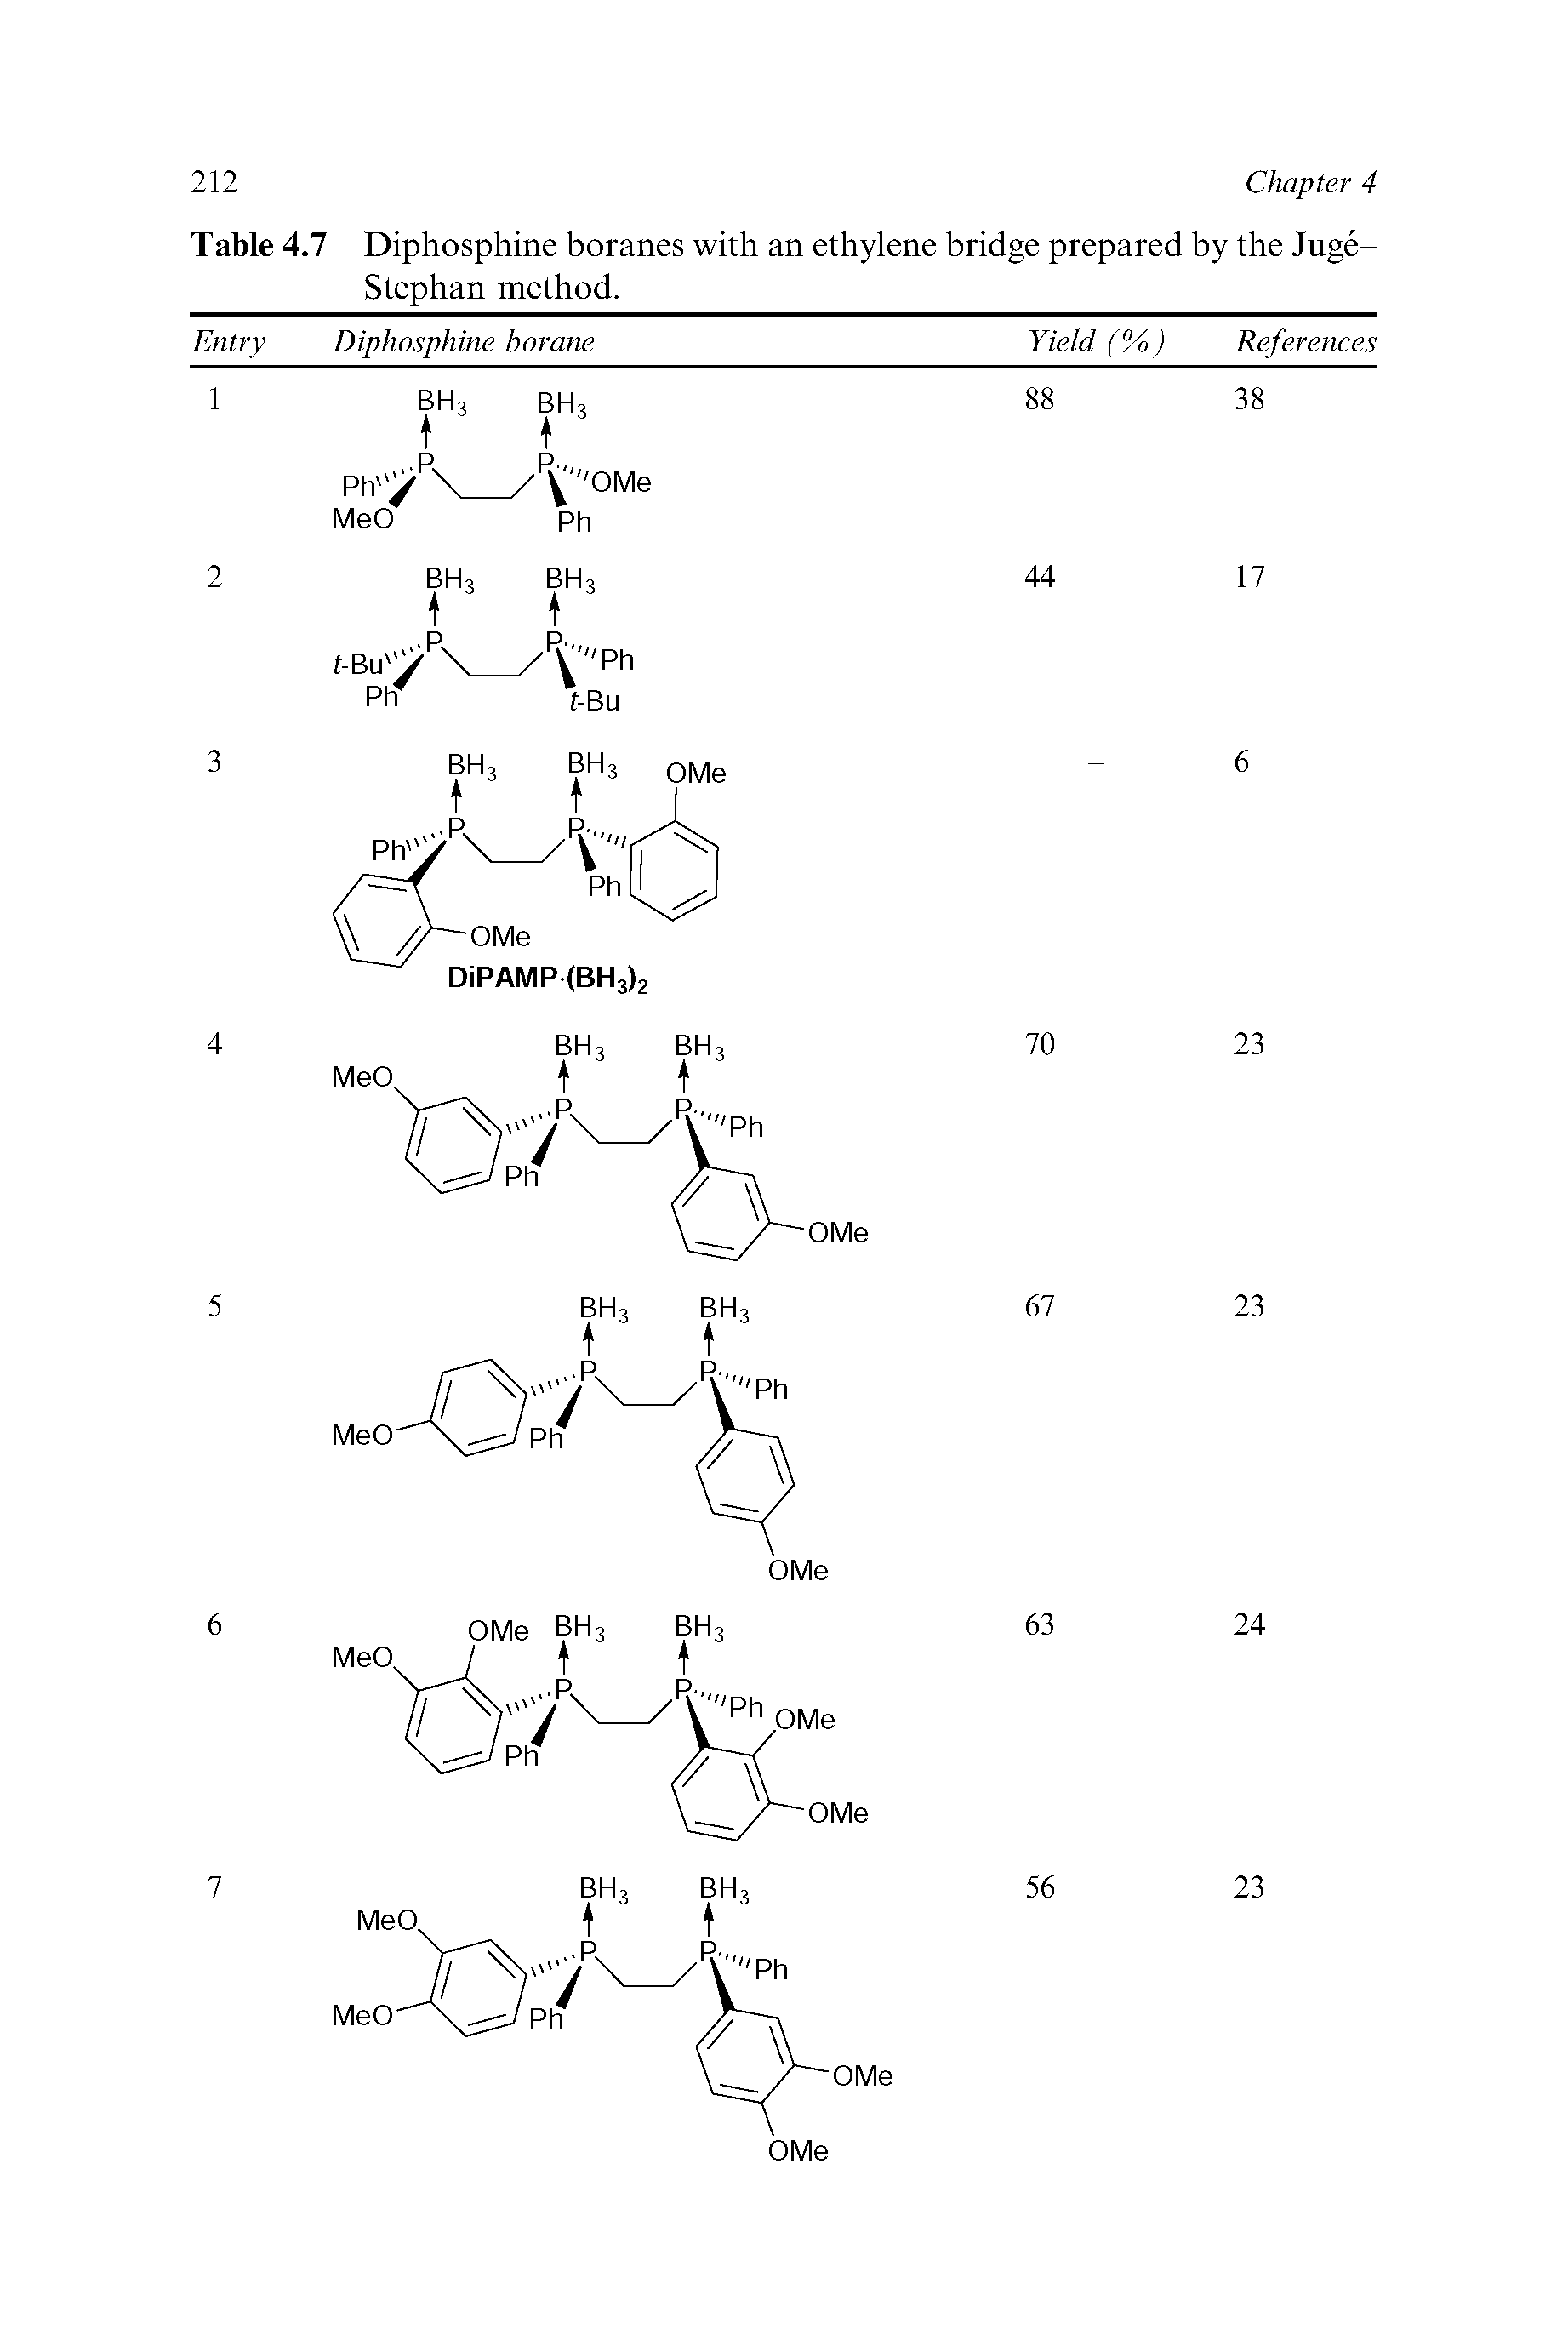 Table 4.7 Diphosphine boranes with an ethylene bridge prepared by the Juge-Stephan method.